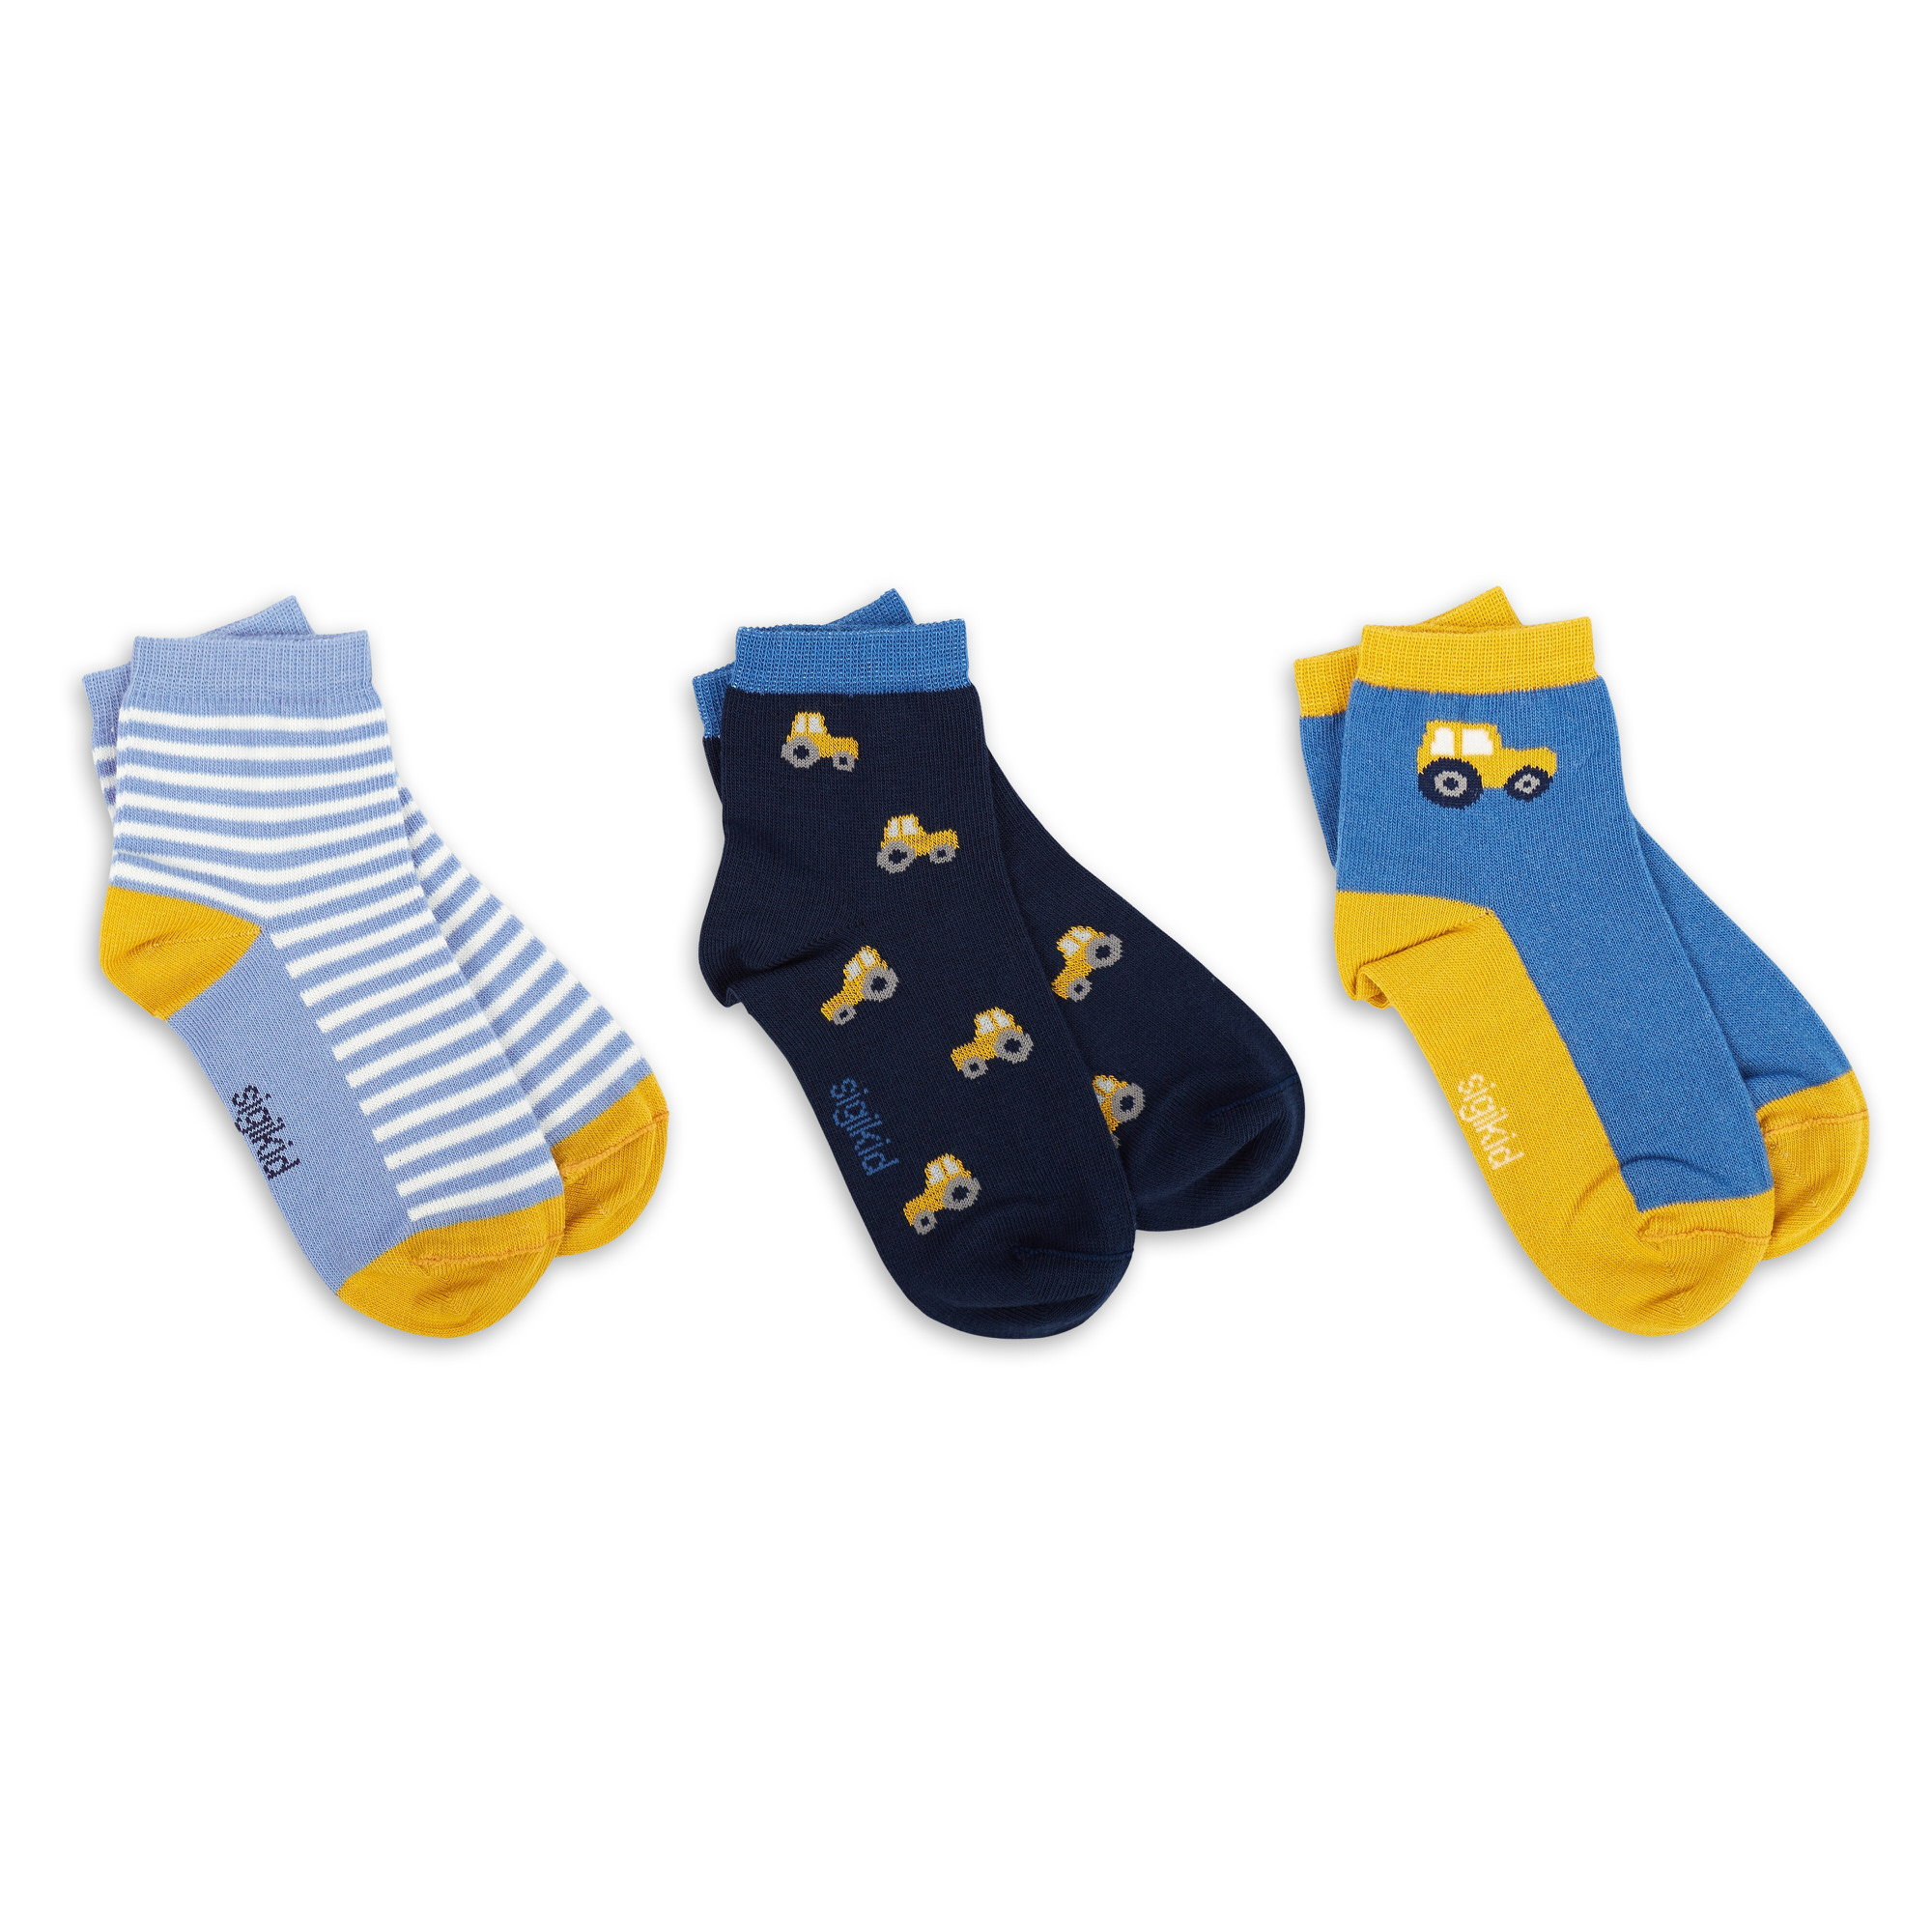 3 pair set children's socks, navy/blue/yellow